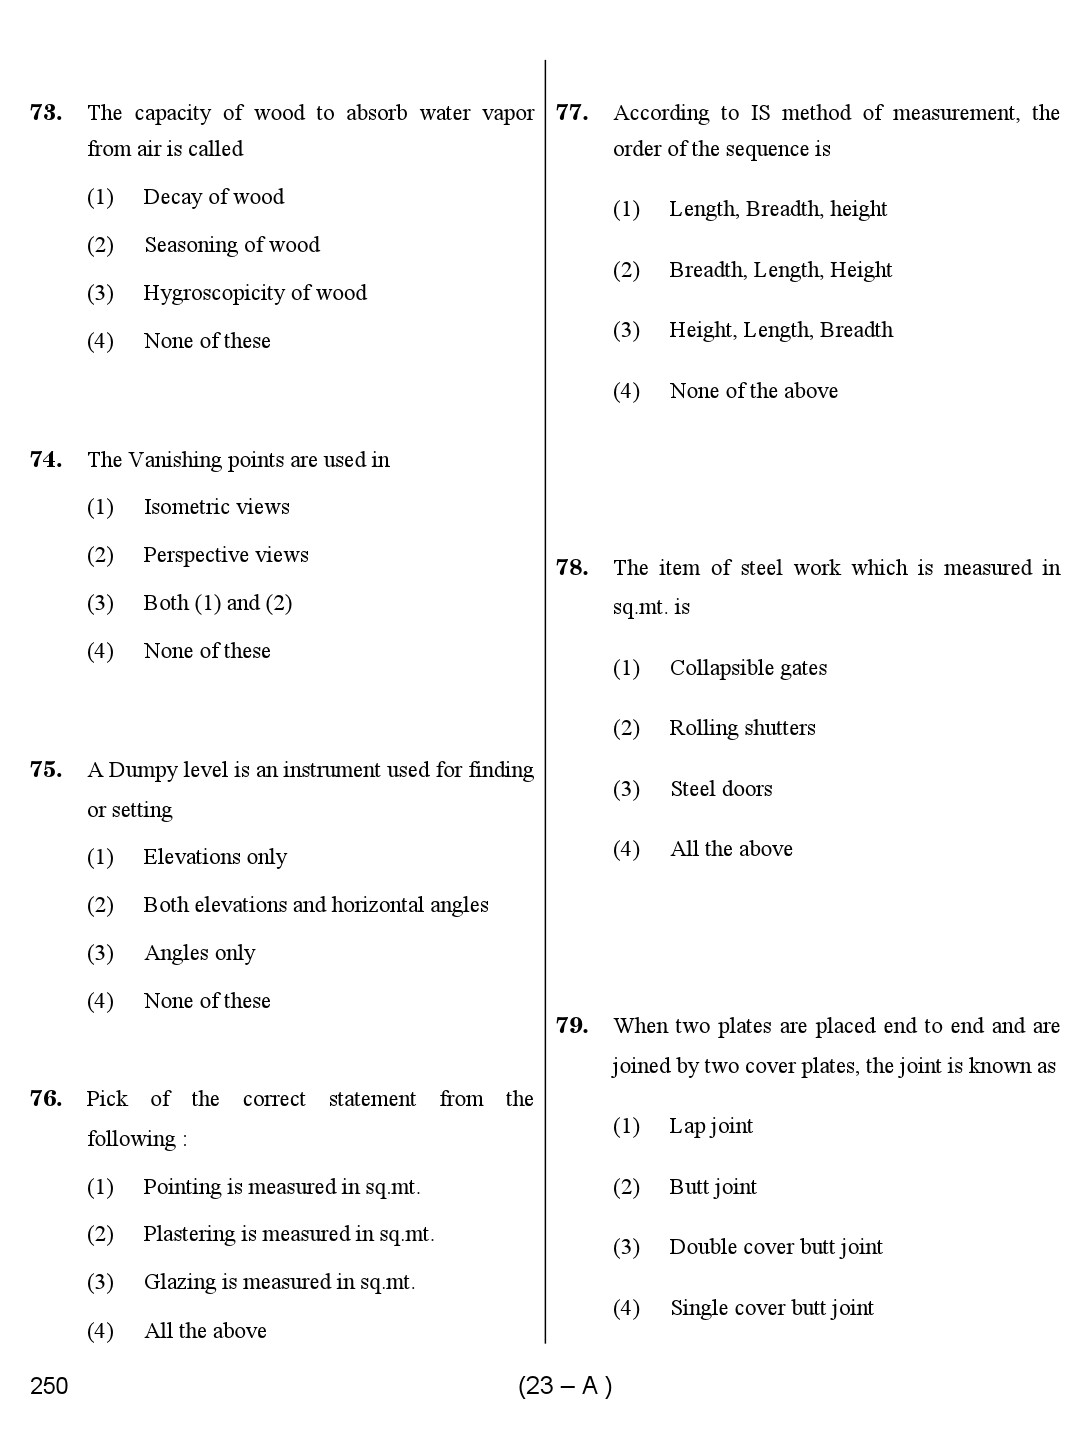 Karnataka PSC Draughtsman Exam Sample Question Paper 23